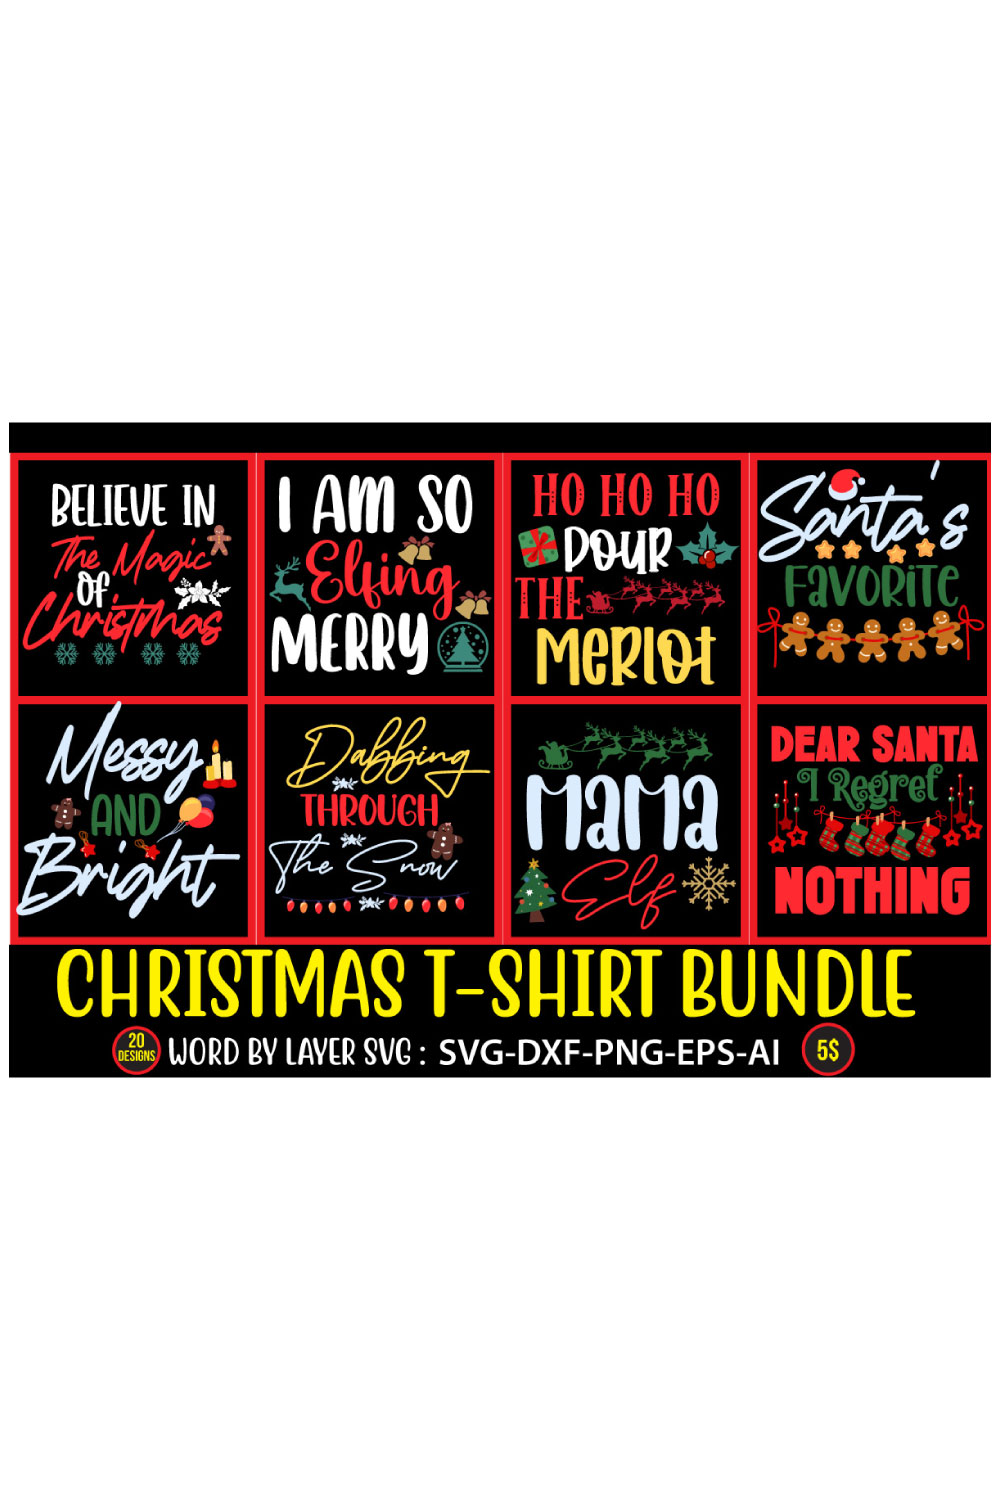 T-shirt Christmas SVG Design pinterest image.